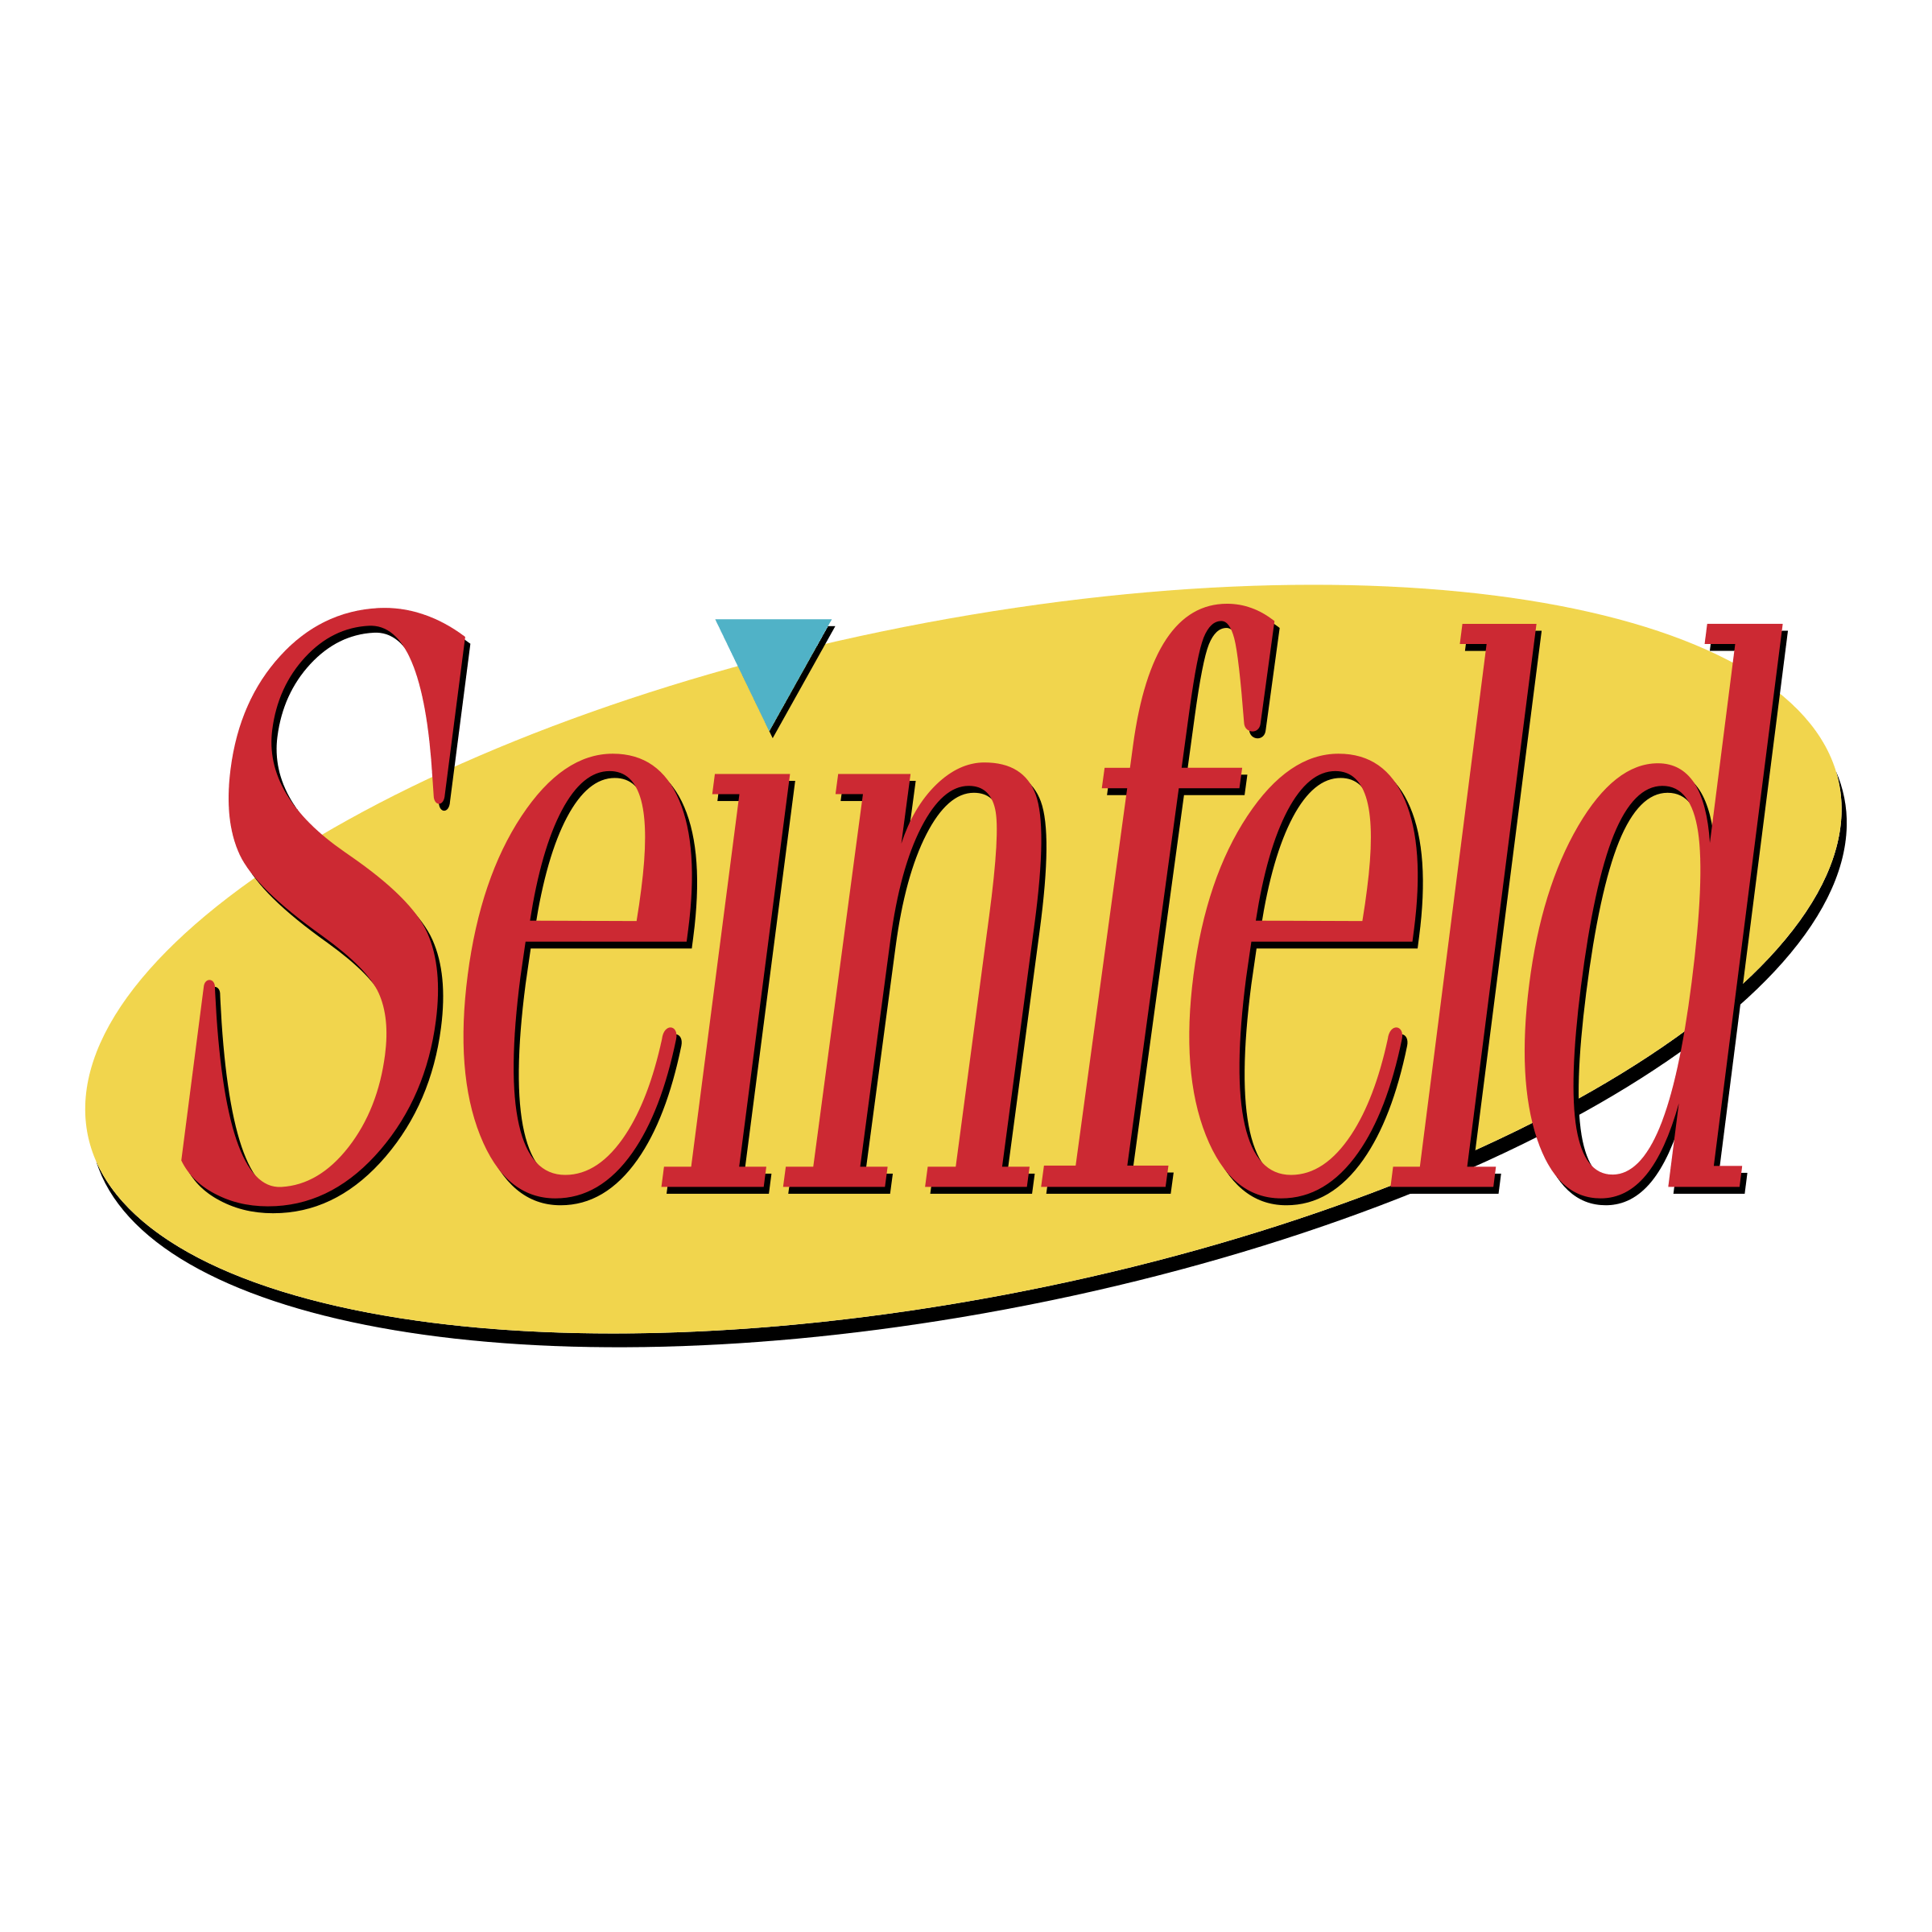 Seinfeld Logo - Seinfeld Logo PNG Transparent & SVG Vector - Freebie Supply